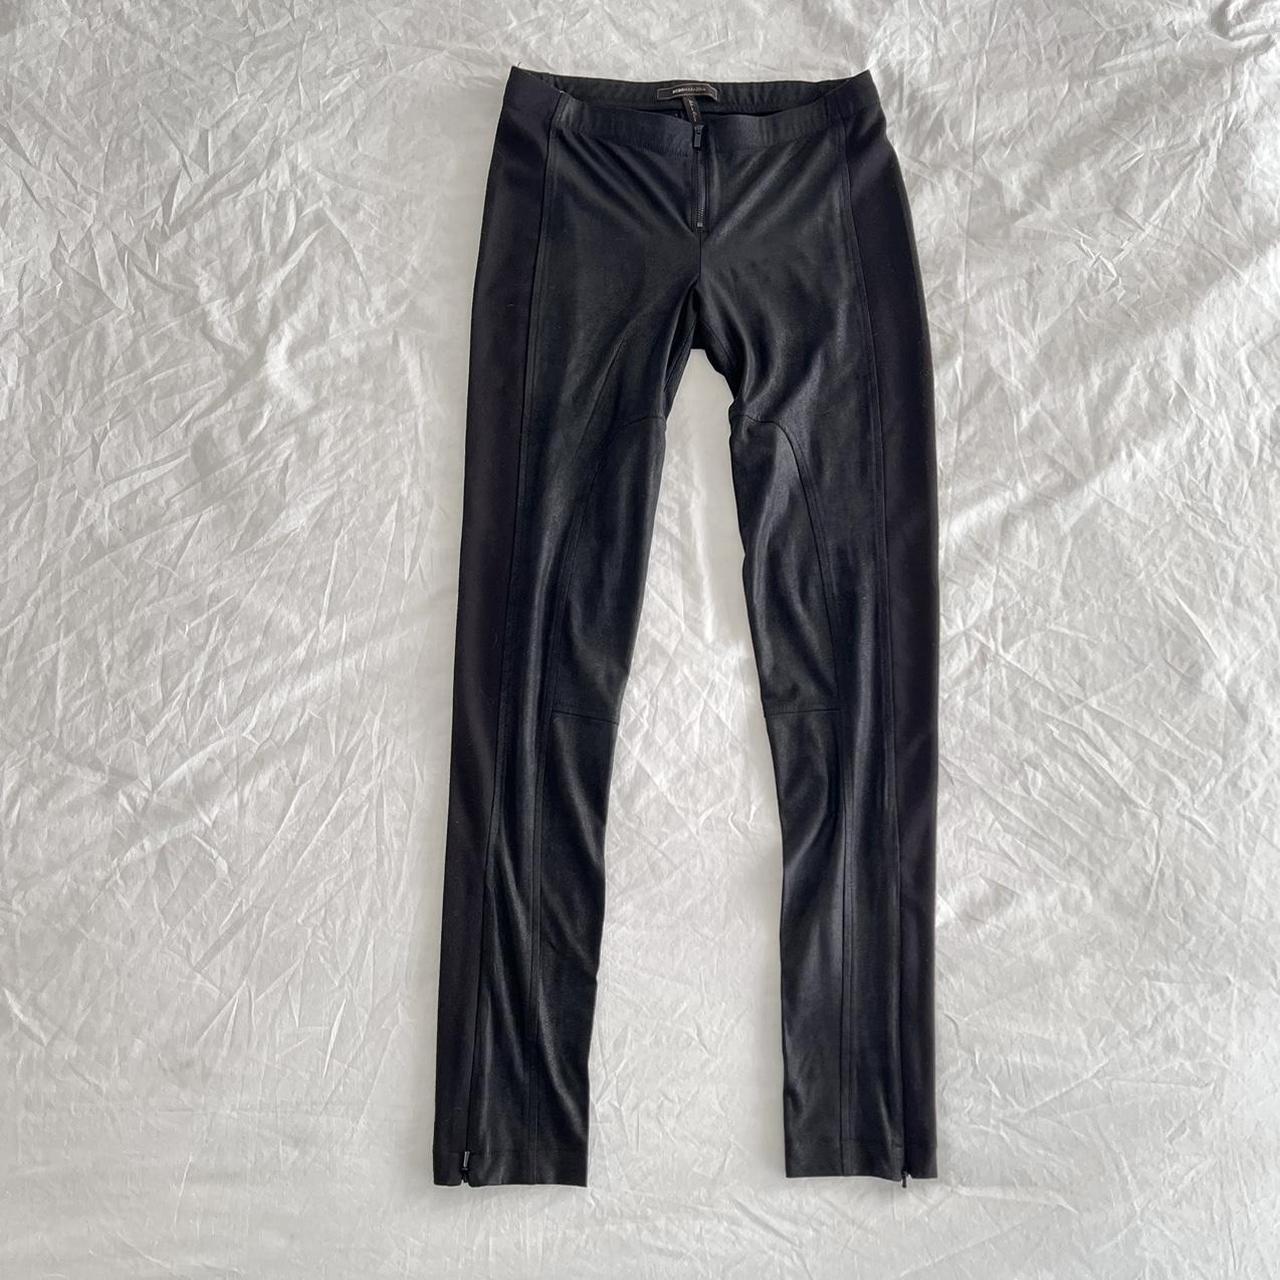 ✿ BCBG ✿ Black metallic leggings ✿ low-rise with - Depop